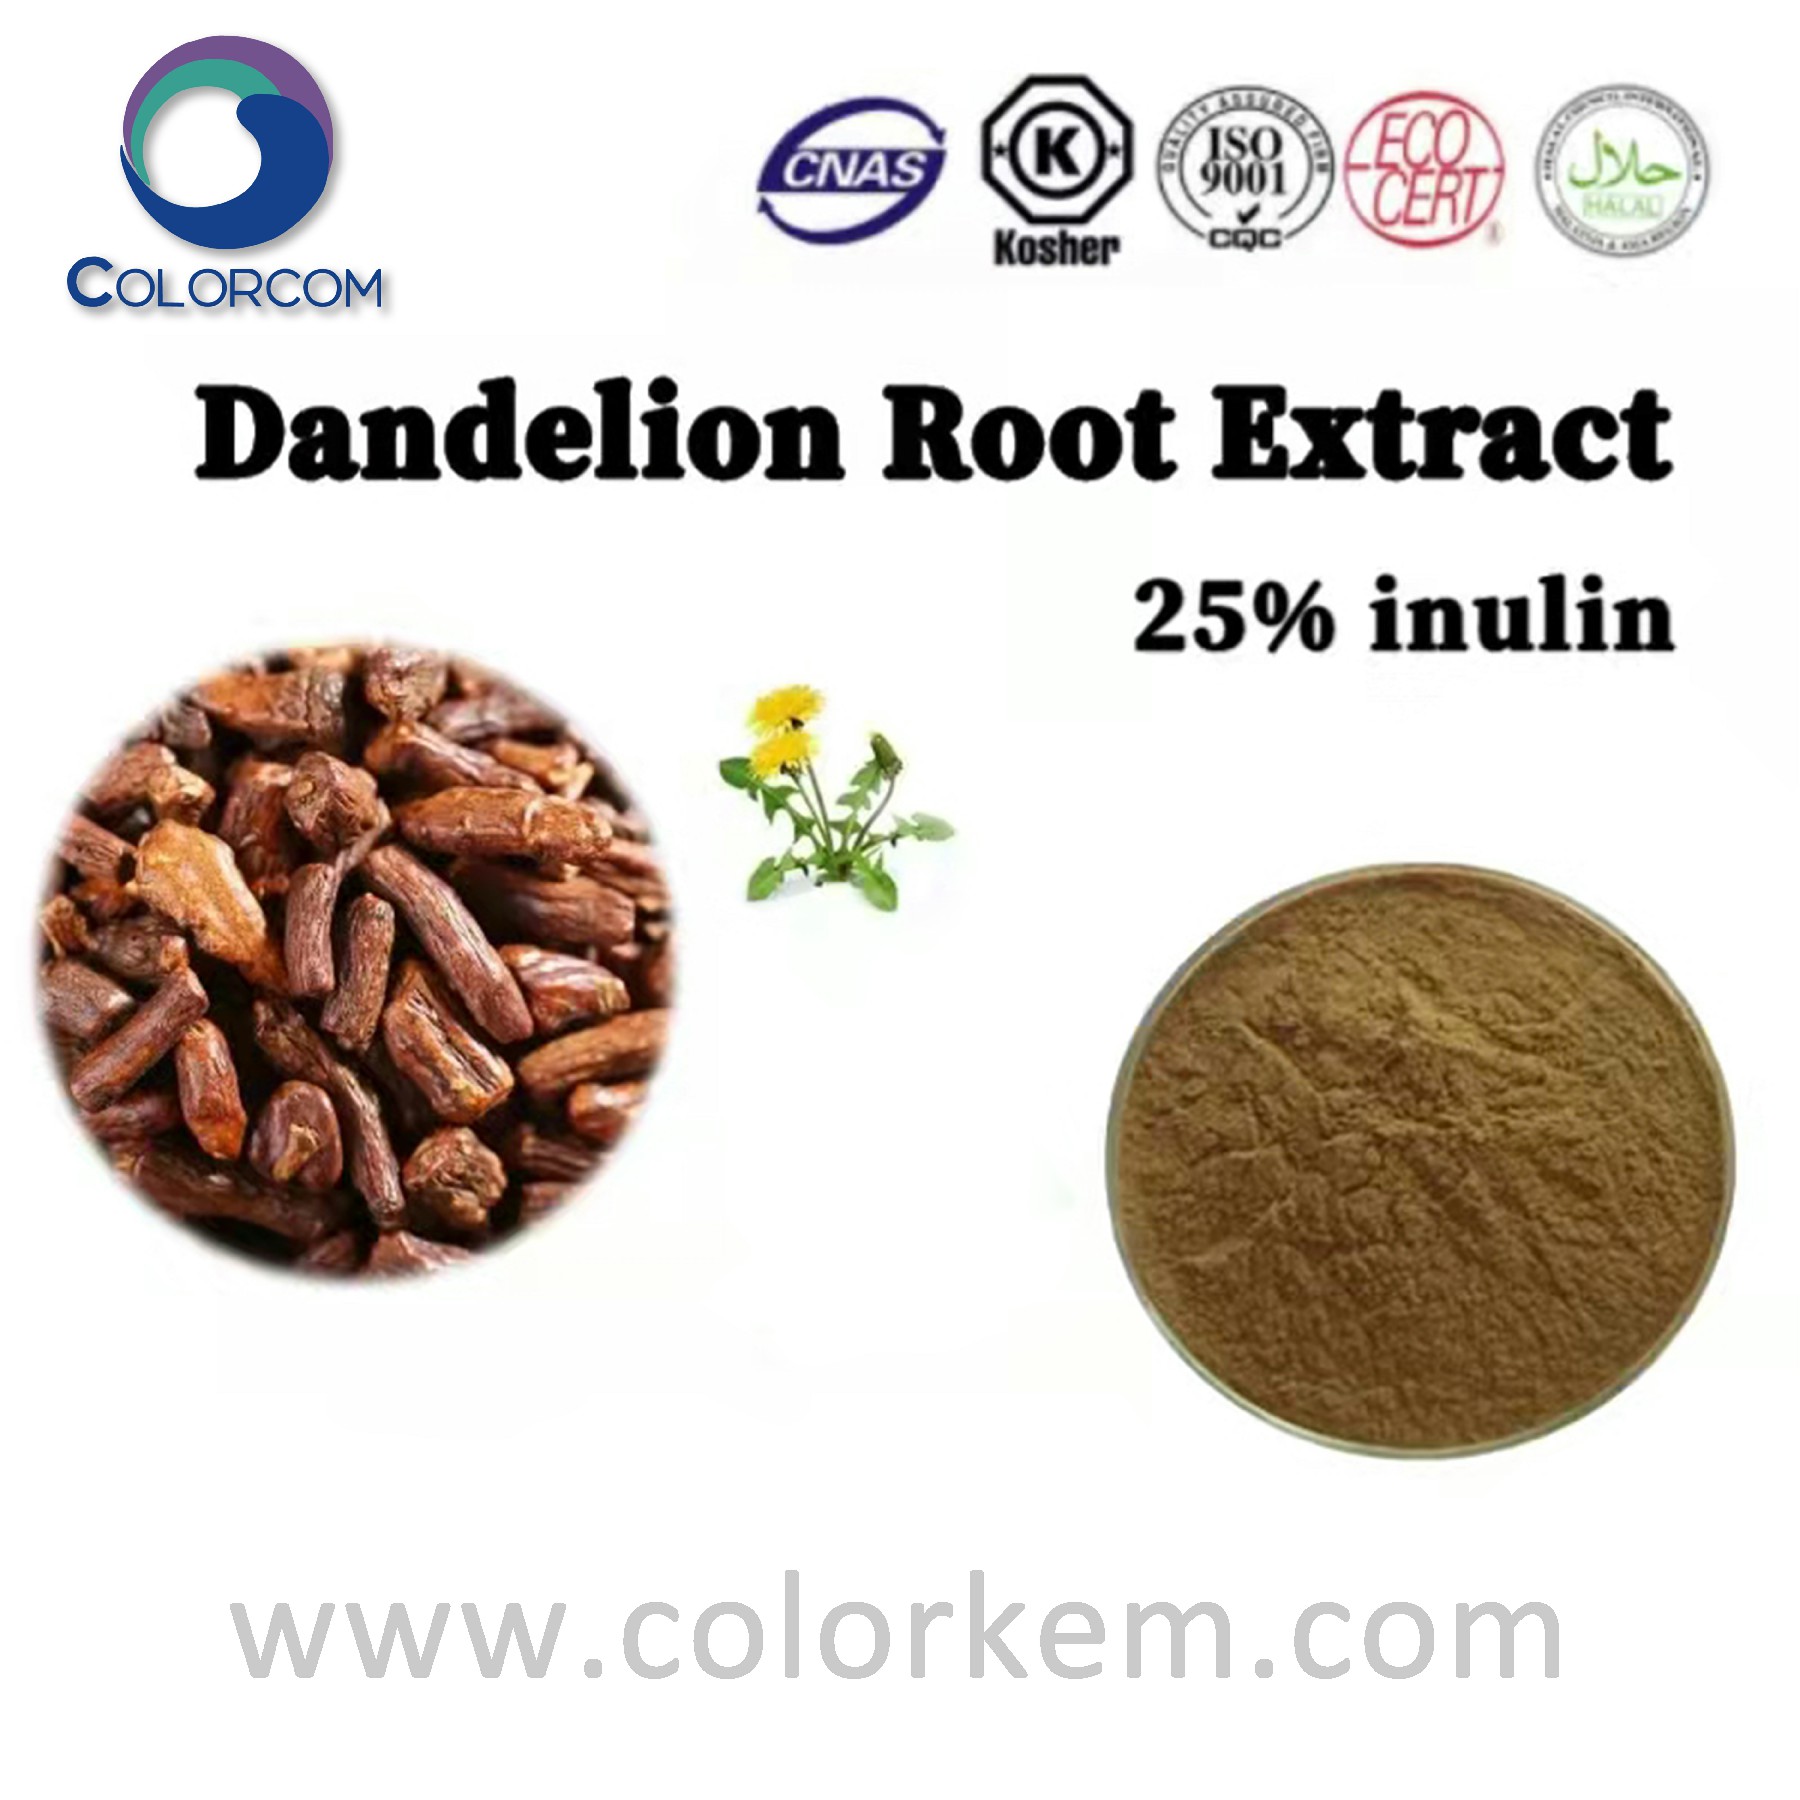 Dandelion root extract inulin